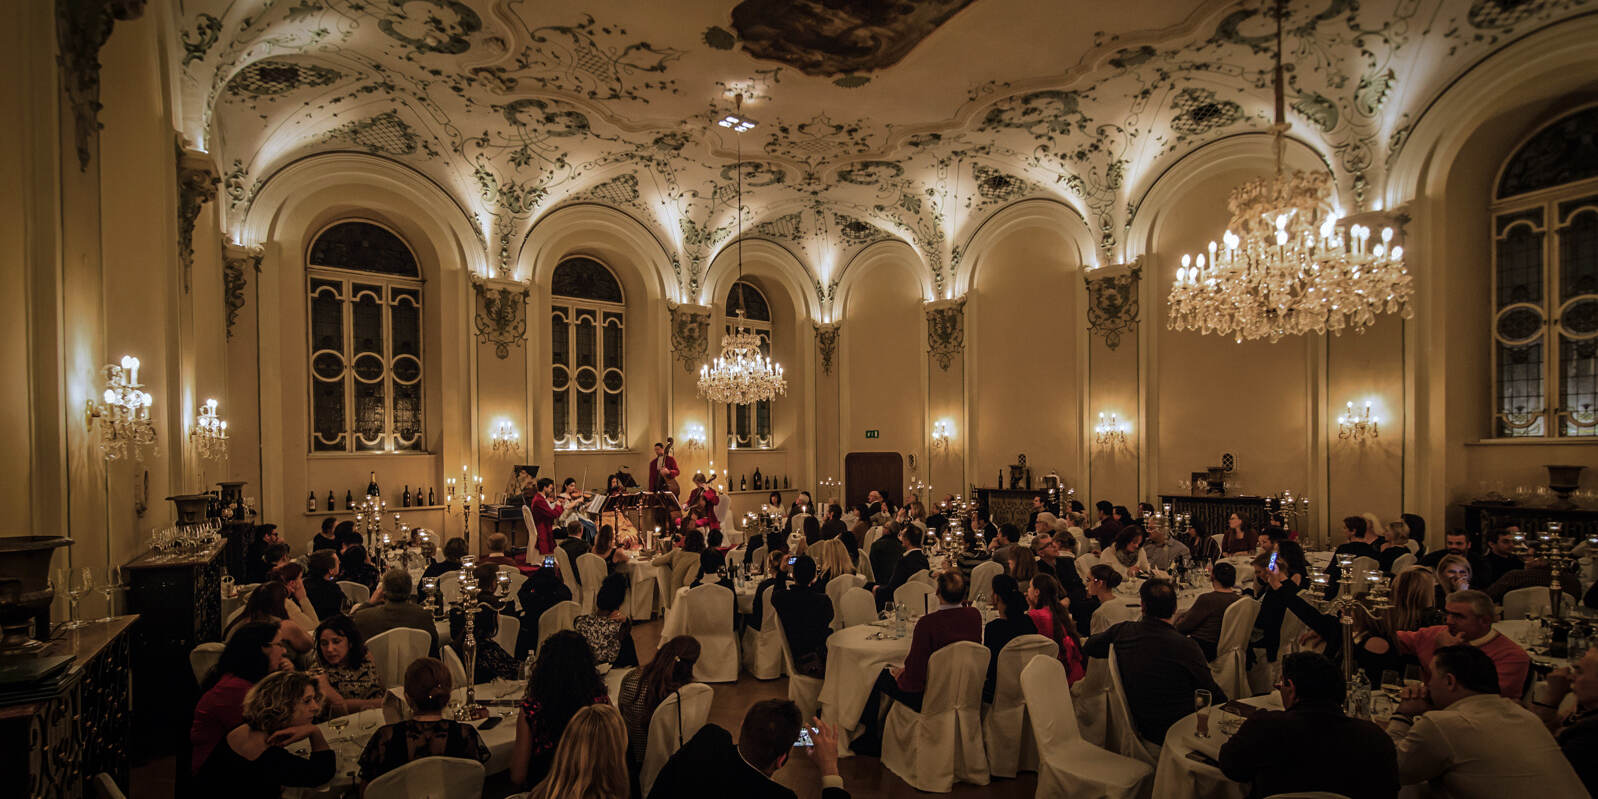 Mozart Dinner Concert Salzburg - Baroque hall full of guests © Michael Groessinger